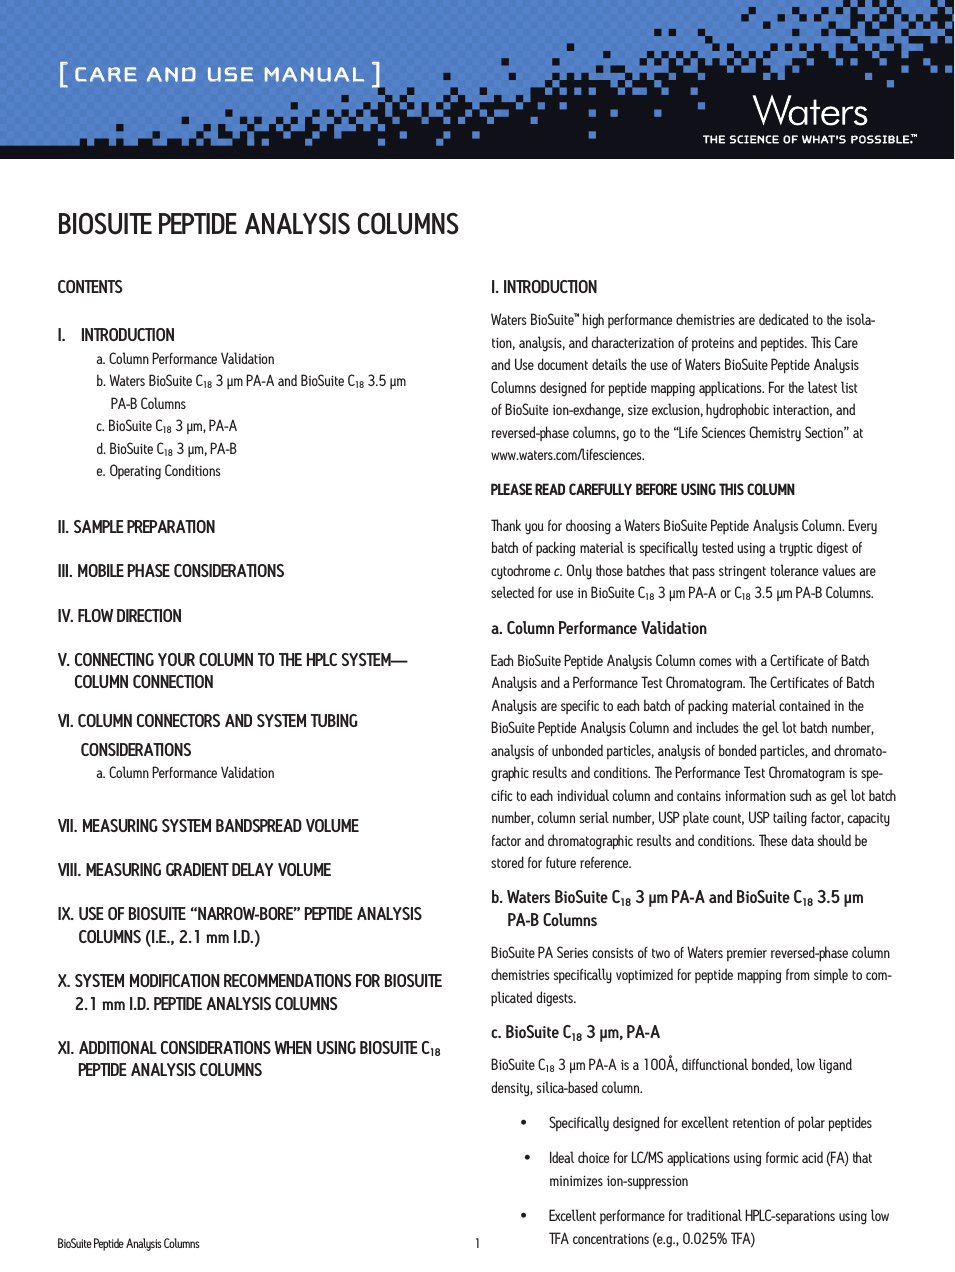 BioSuite Peptide Analysis Columns